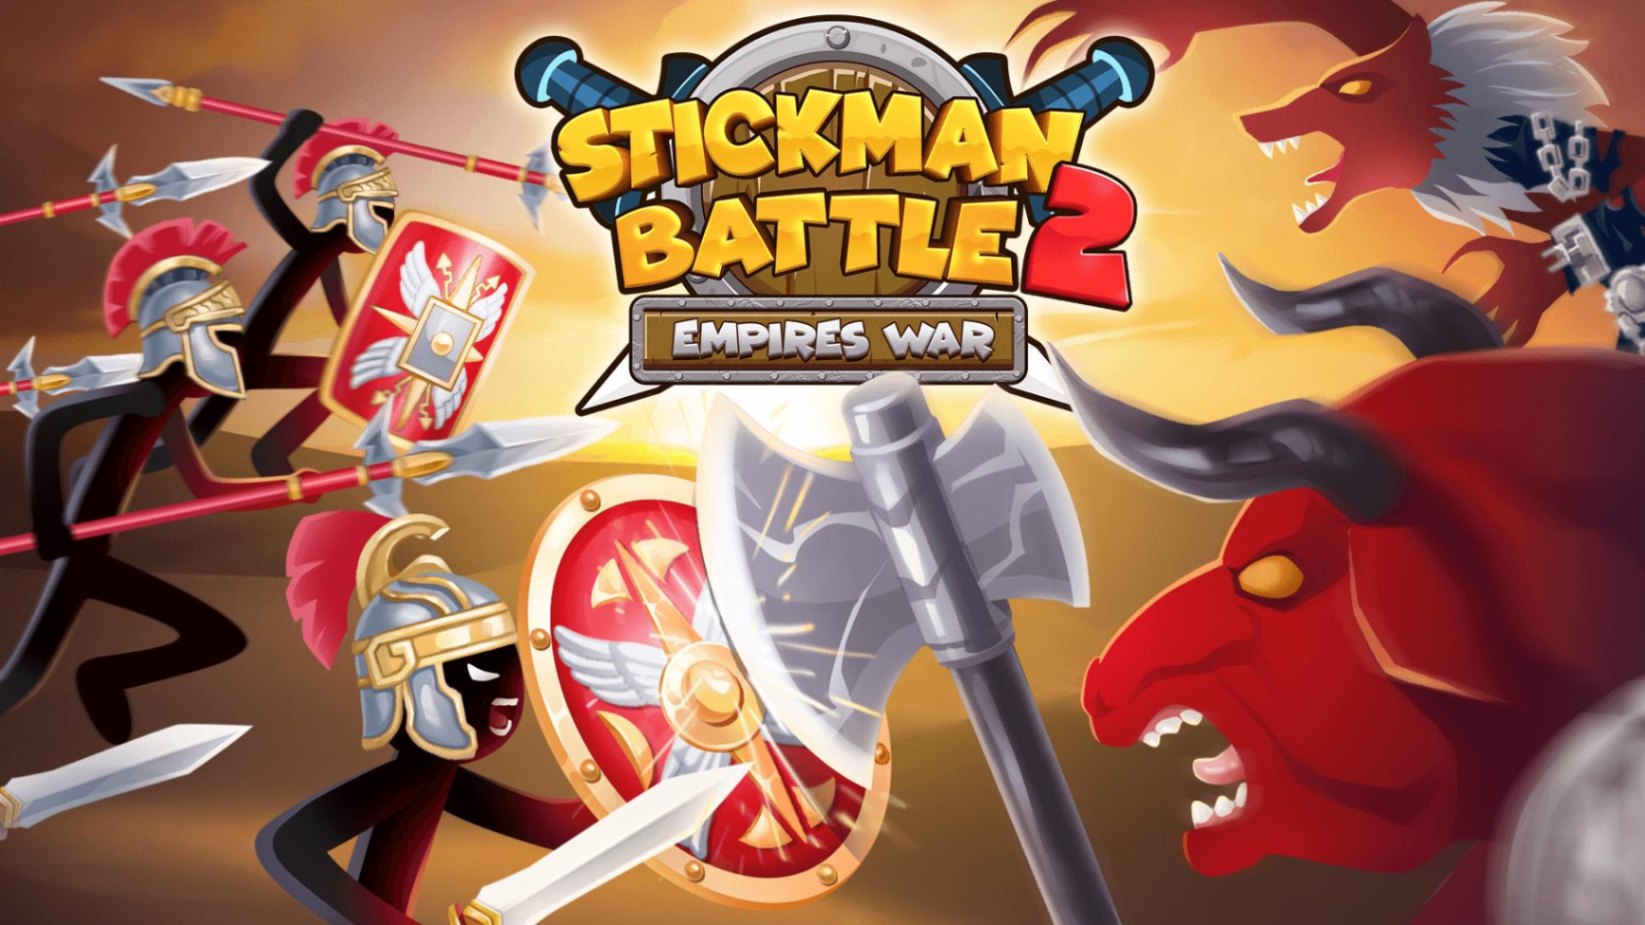 Stickman Battle Empires War - How to Get Coins